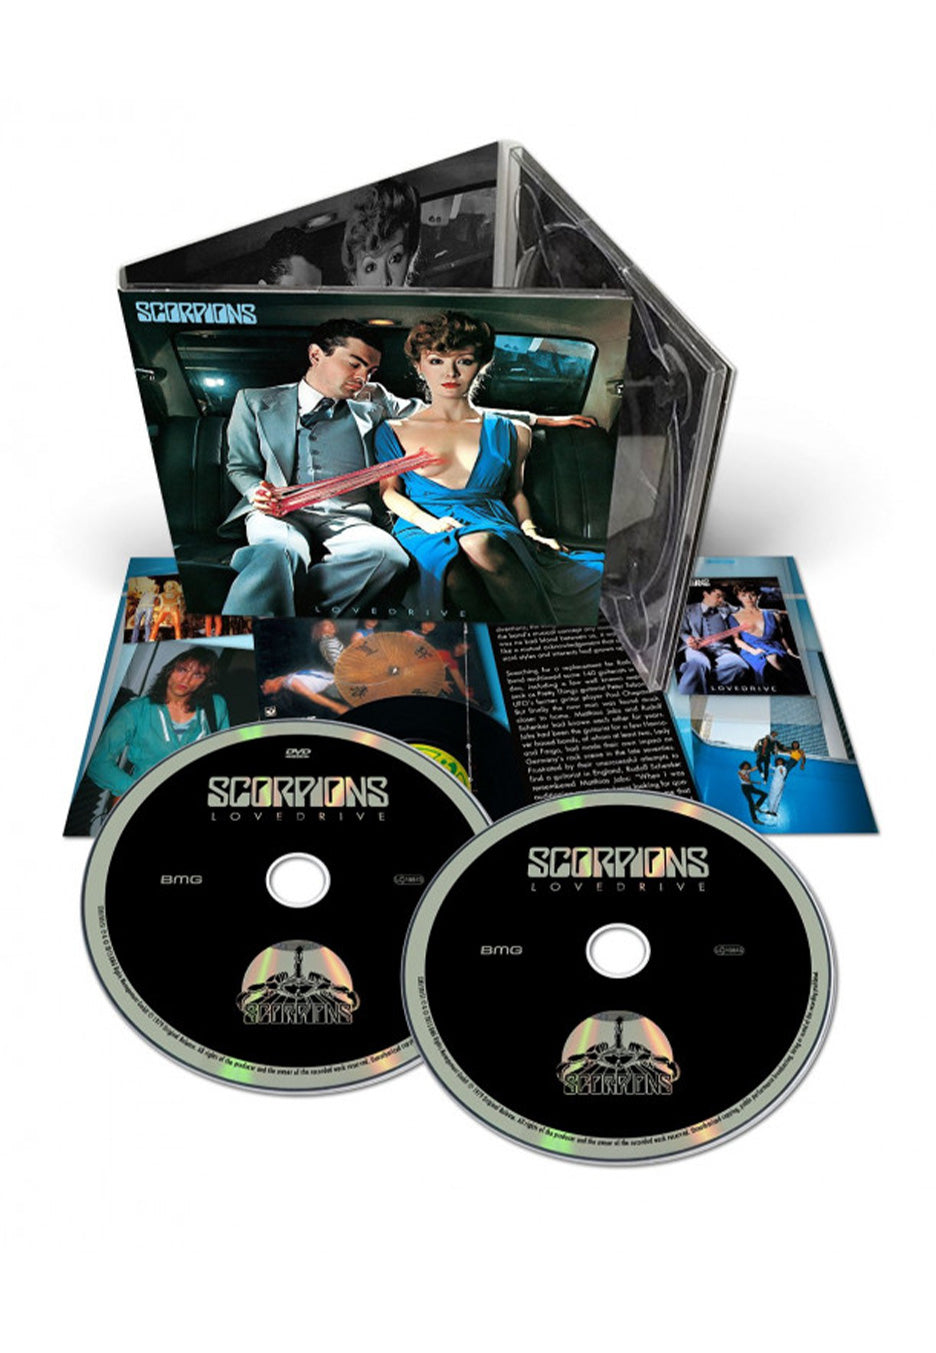 Scorpions - Lovedrive (50th Anniversary Deluxe Version) - CD + DVD